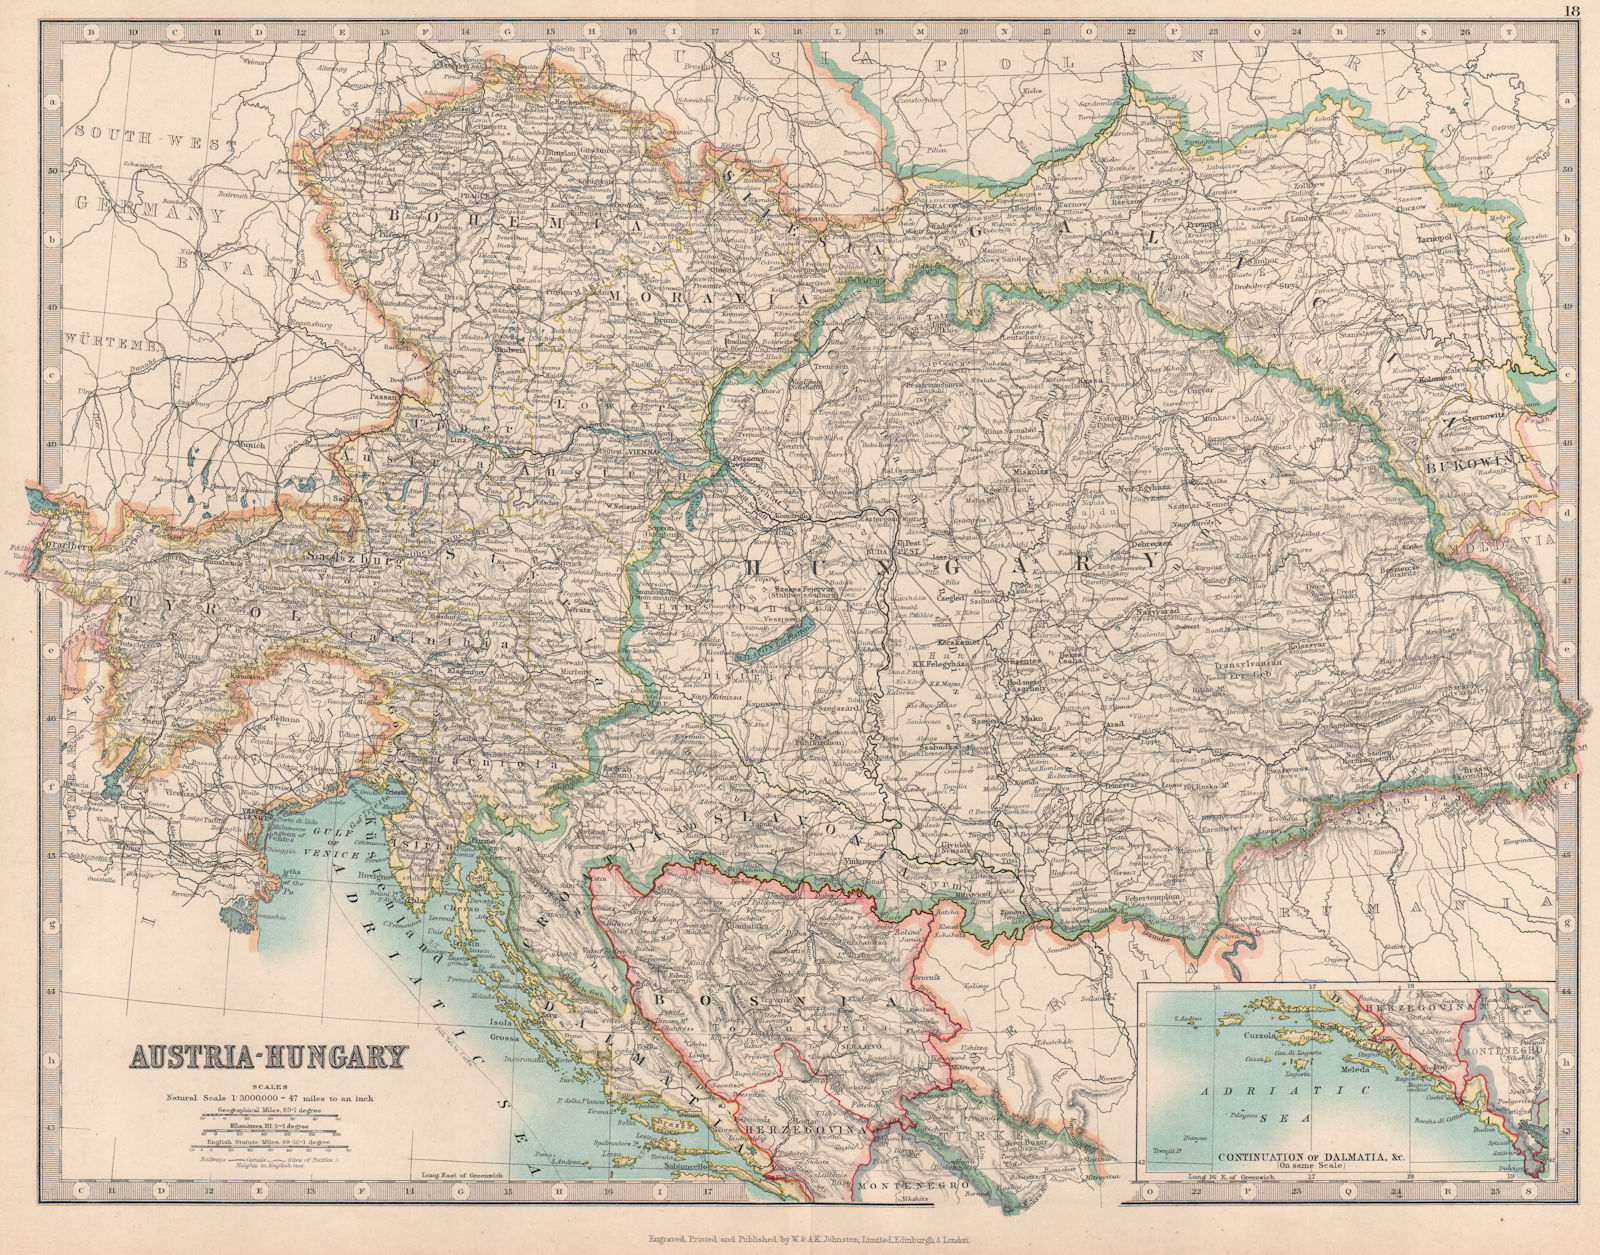 Associate Product AUSTRIA-HUNGARY. Dalmatian coast. Bosnia. Railways. JOHNSTON 1912 old map